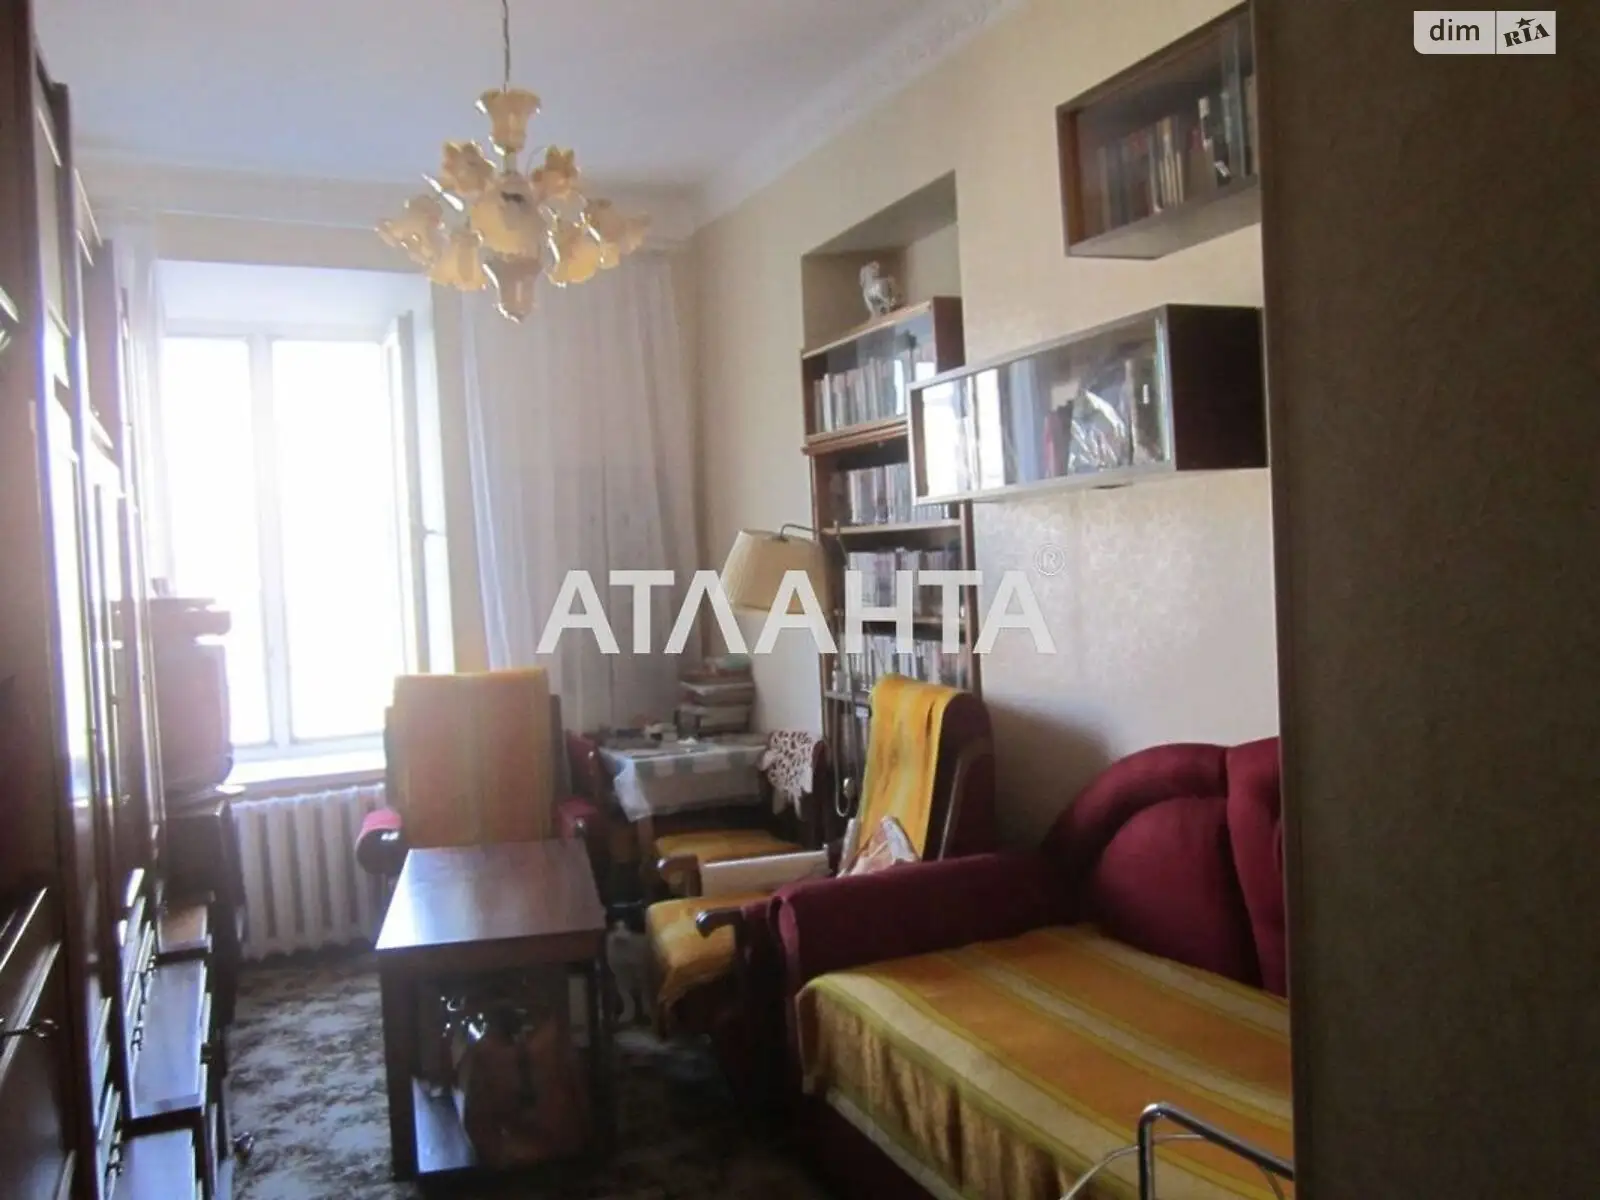 Продается комната 15.7 кв. м в Одессе, цена: 16500 $ - фото 1